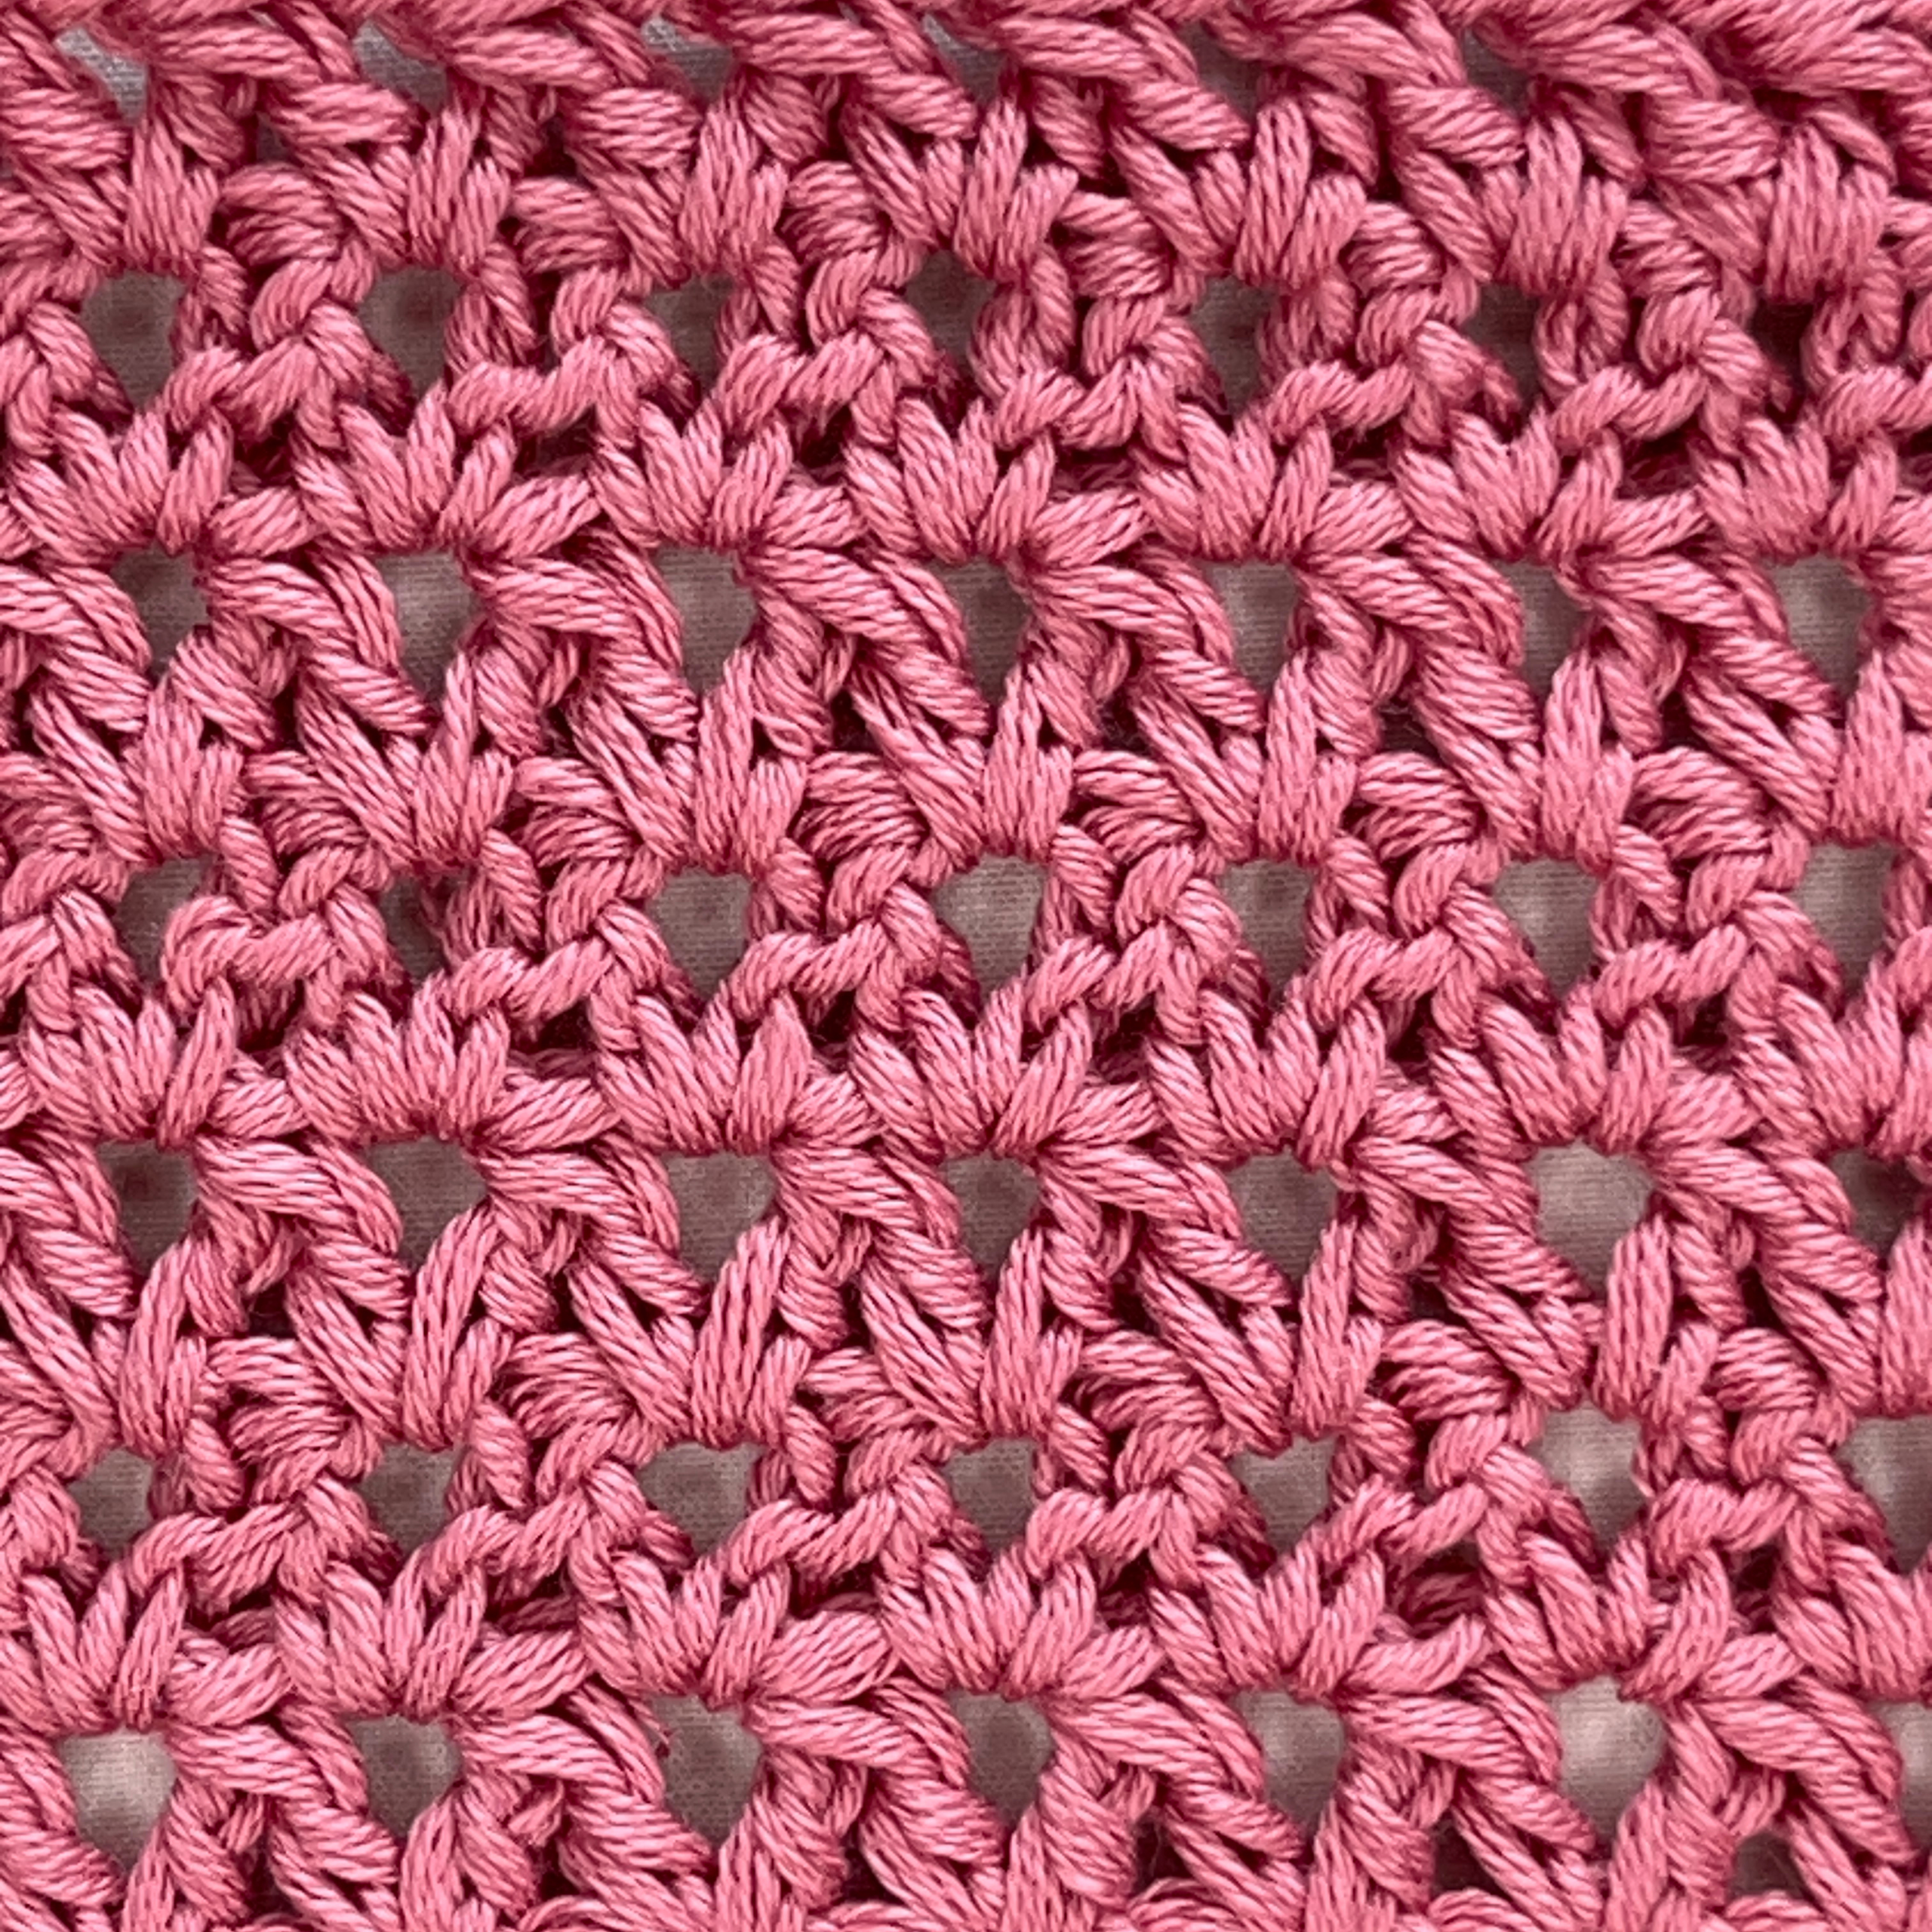 double crochet